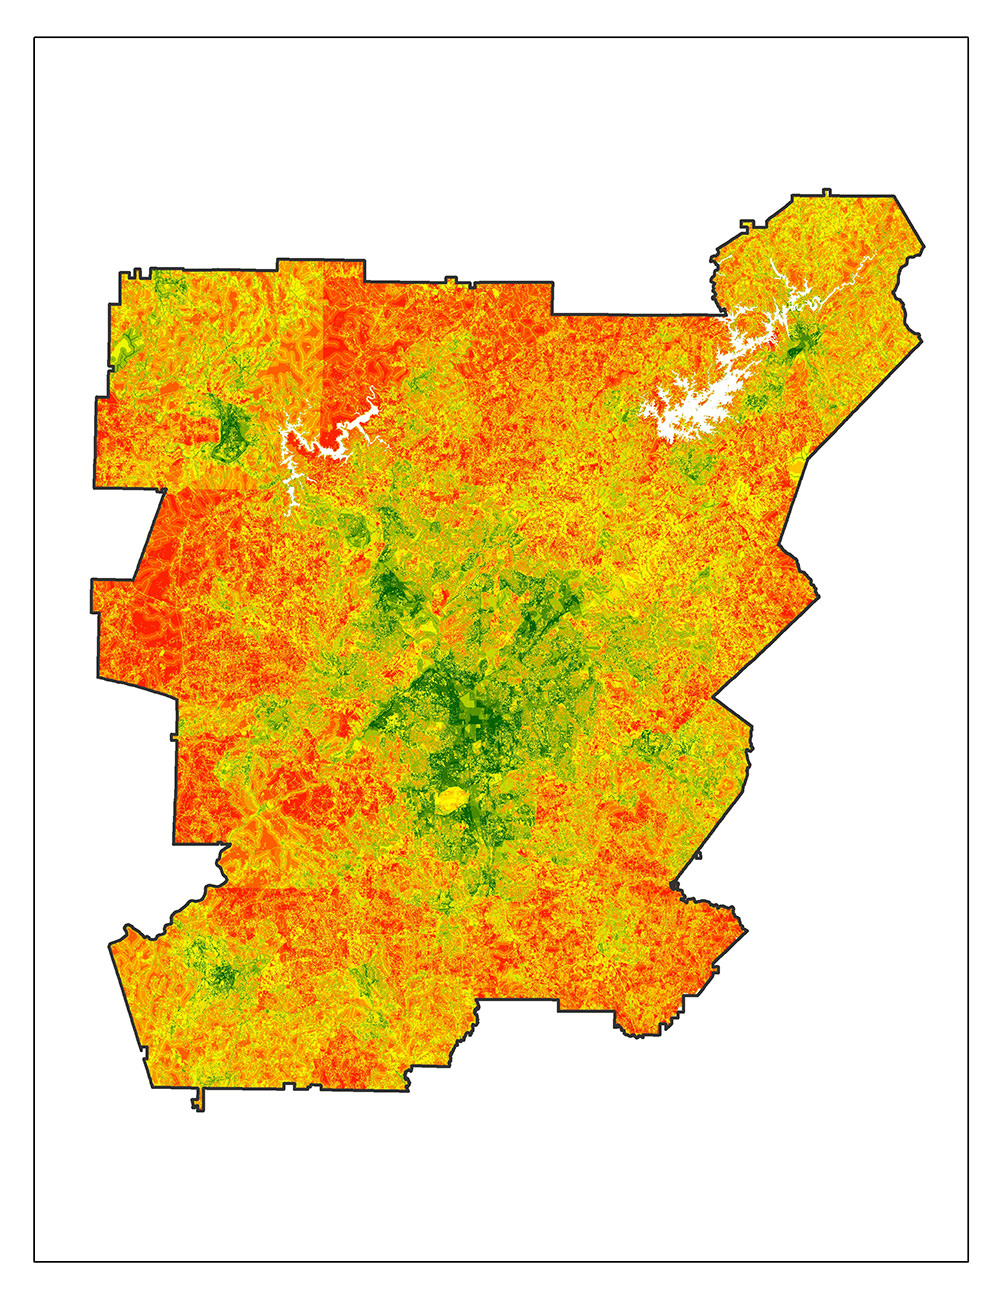 Regions around metropolitan Atlanta with the highest potential to minimize stormwater runoff through green infrastructure development, shown in green.